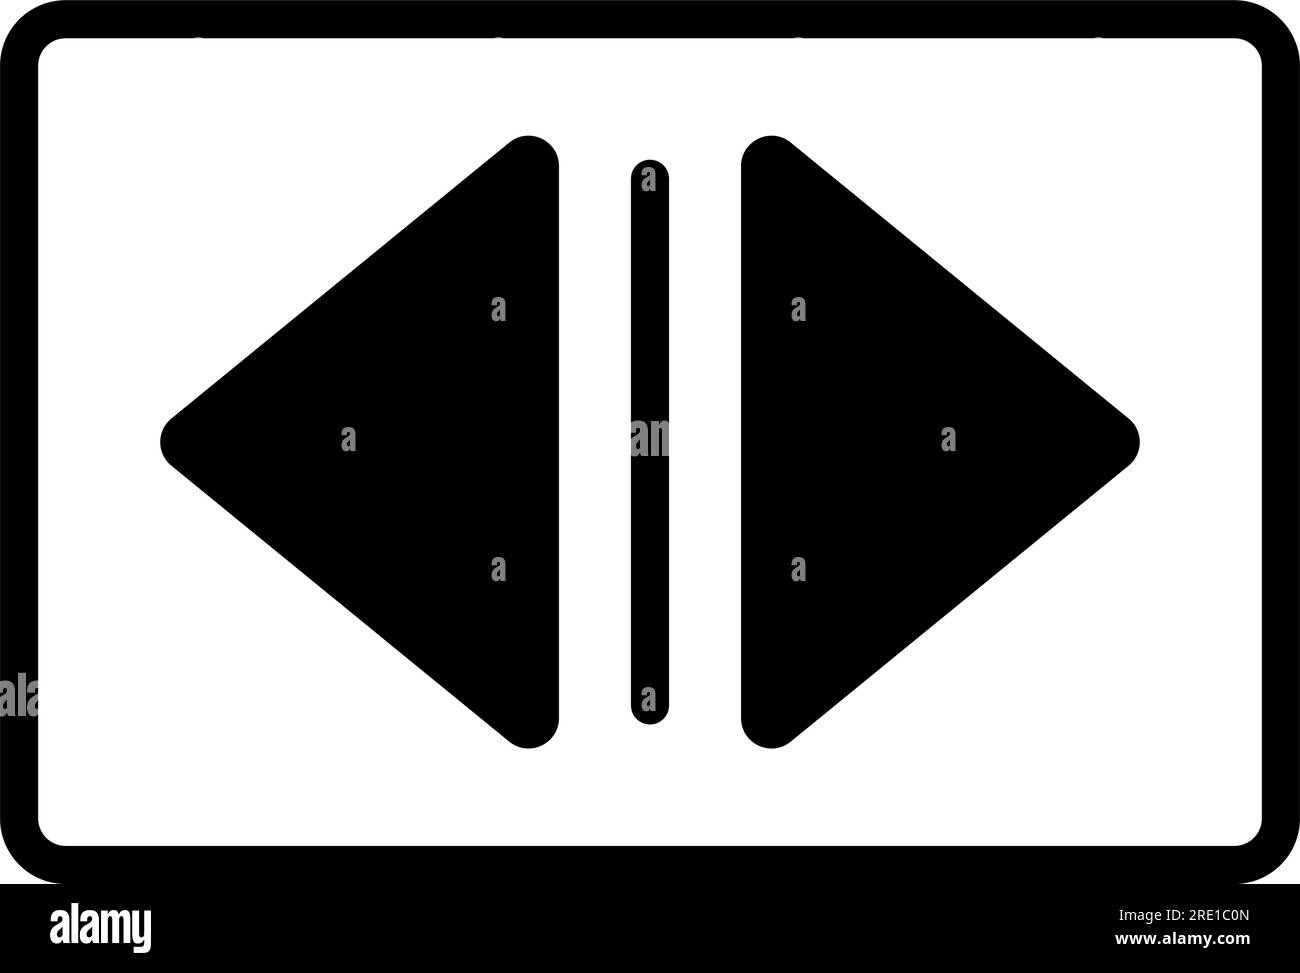 Arrow elevator buttons icon simple design Stock Vector